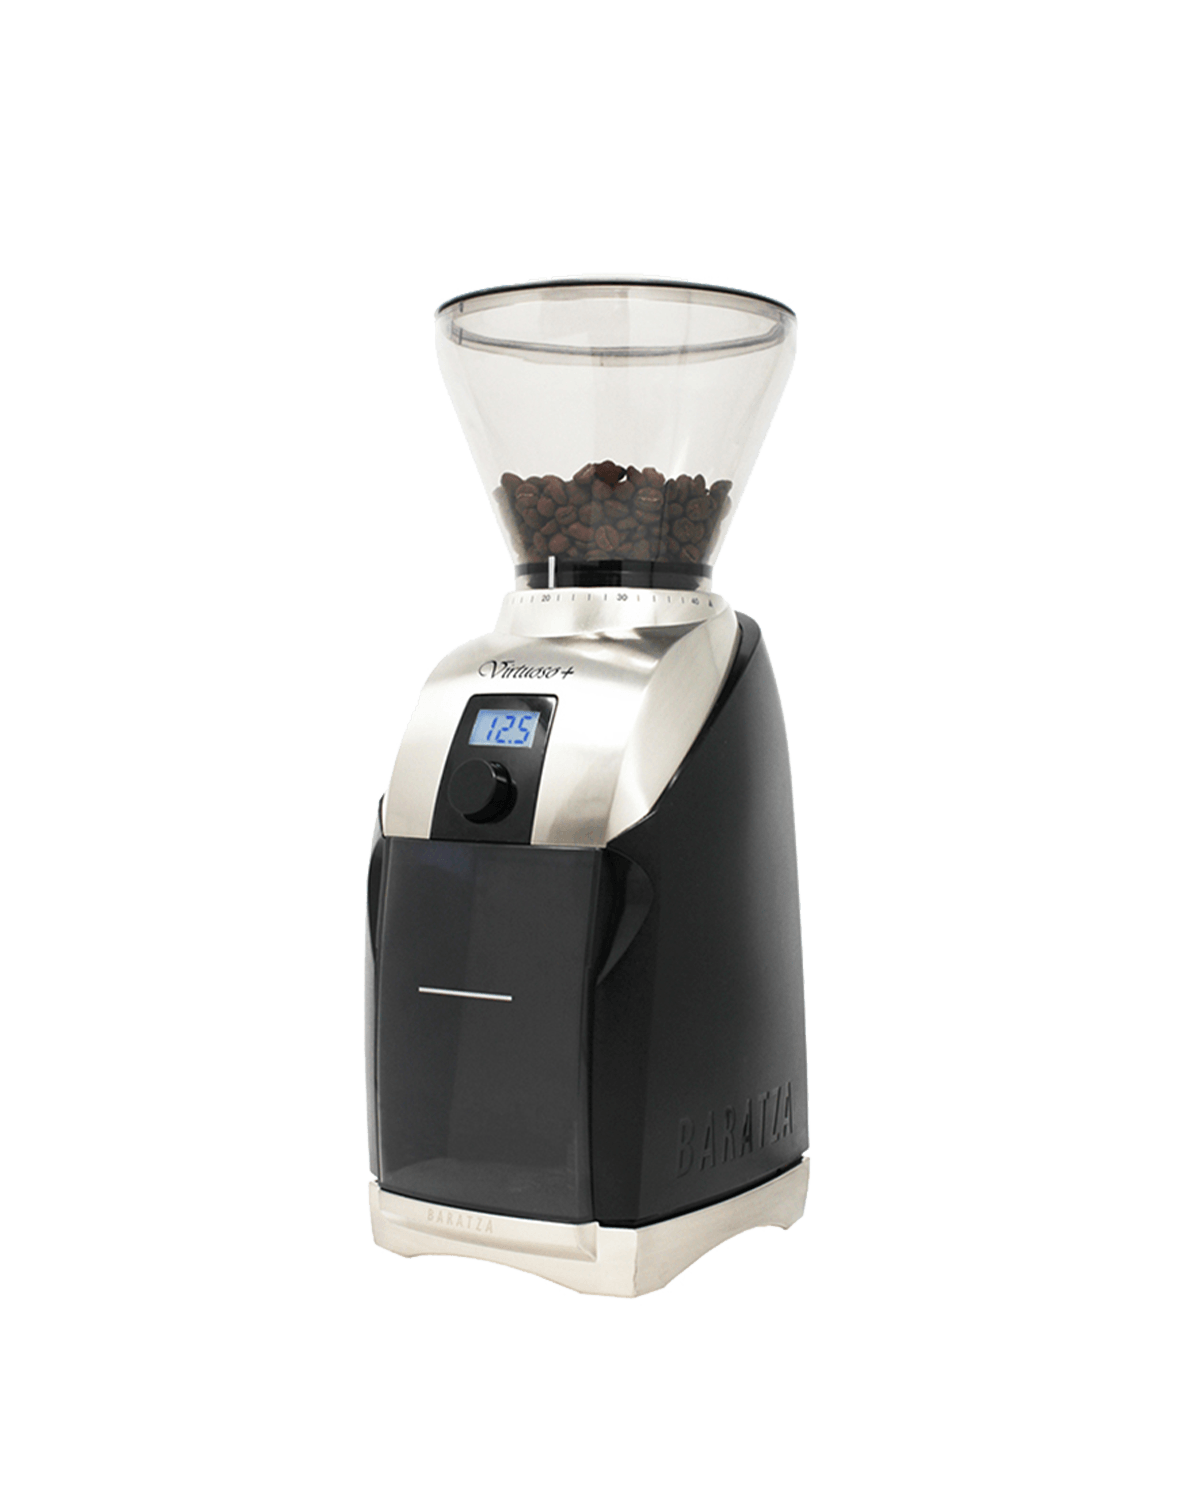 Baratza Virtuoso Conical Burr Coffee Grinder with Digital Timer Display